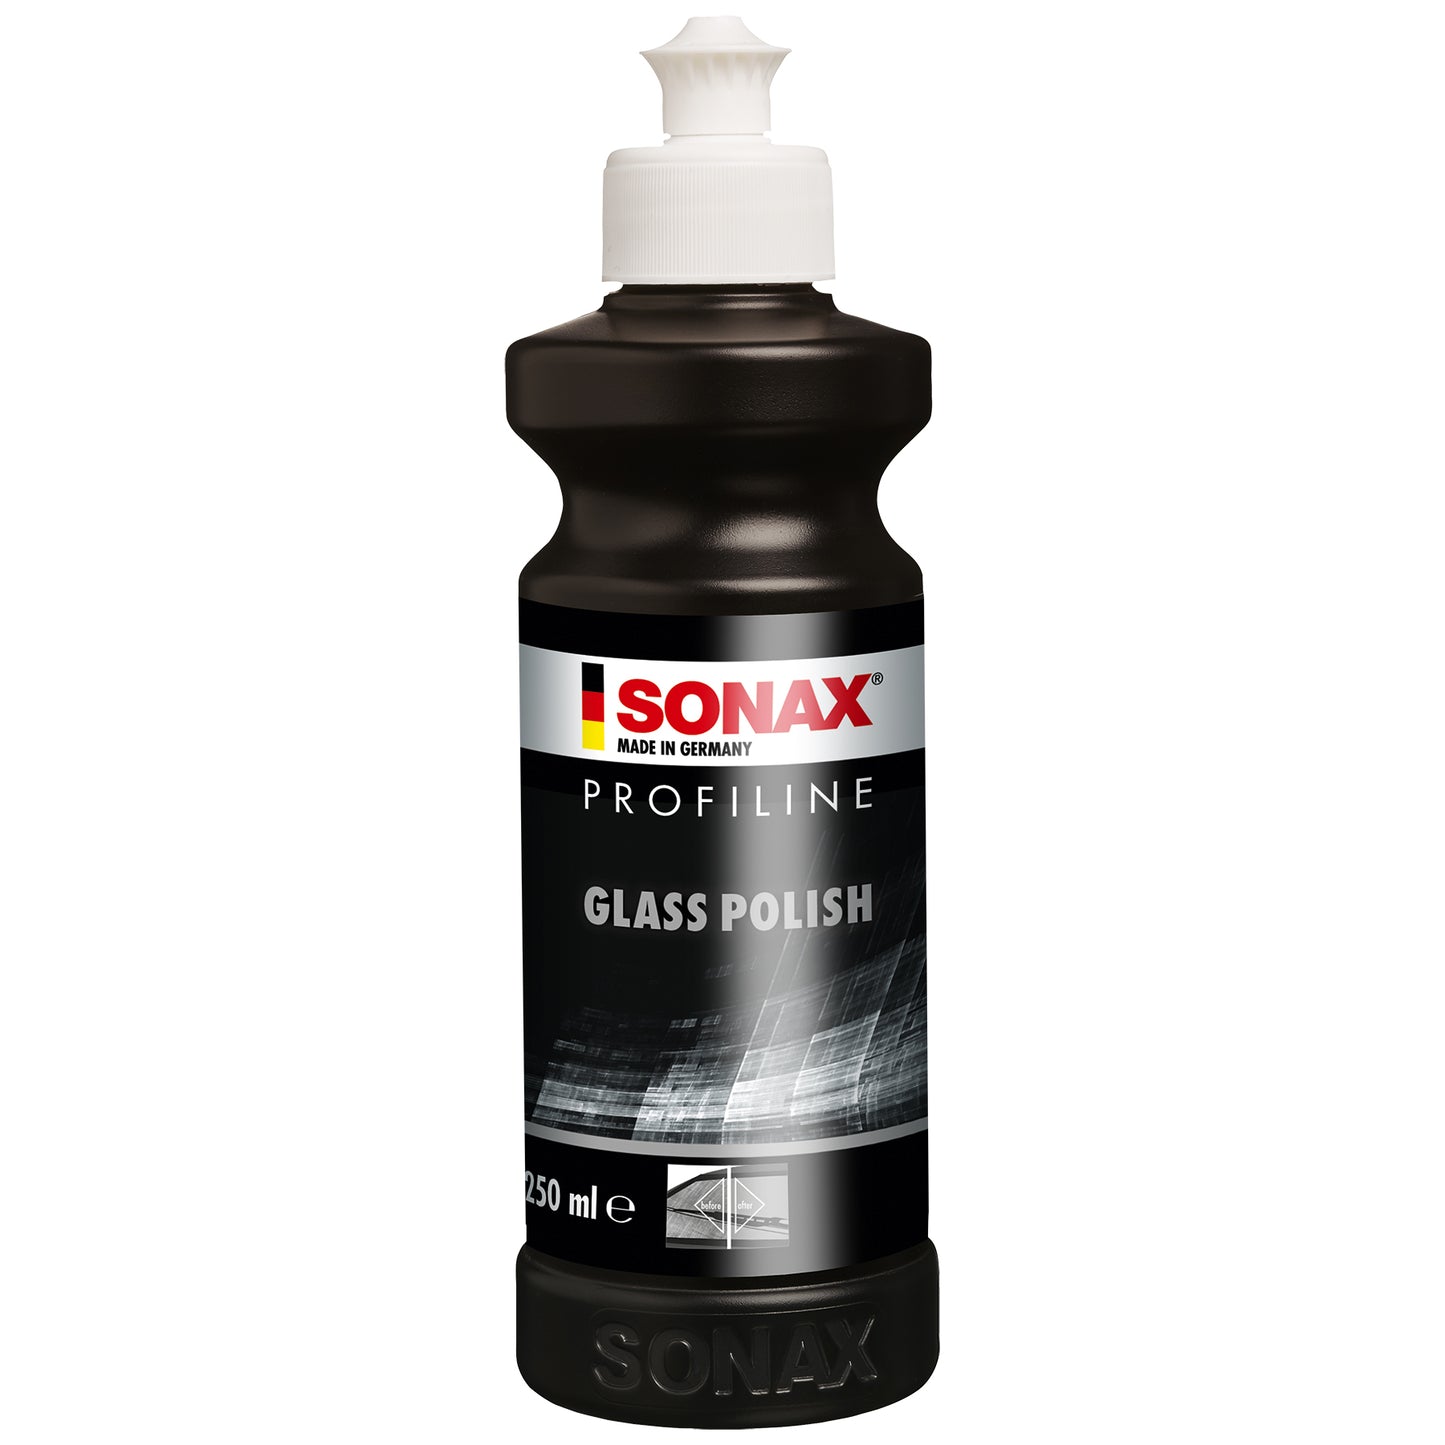 SONAX PROFILINE Glass Polish 250ml